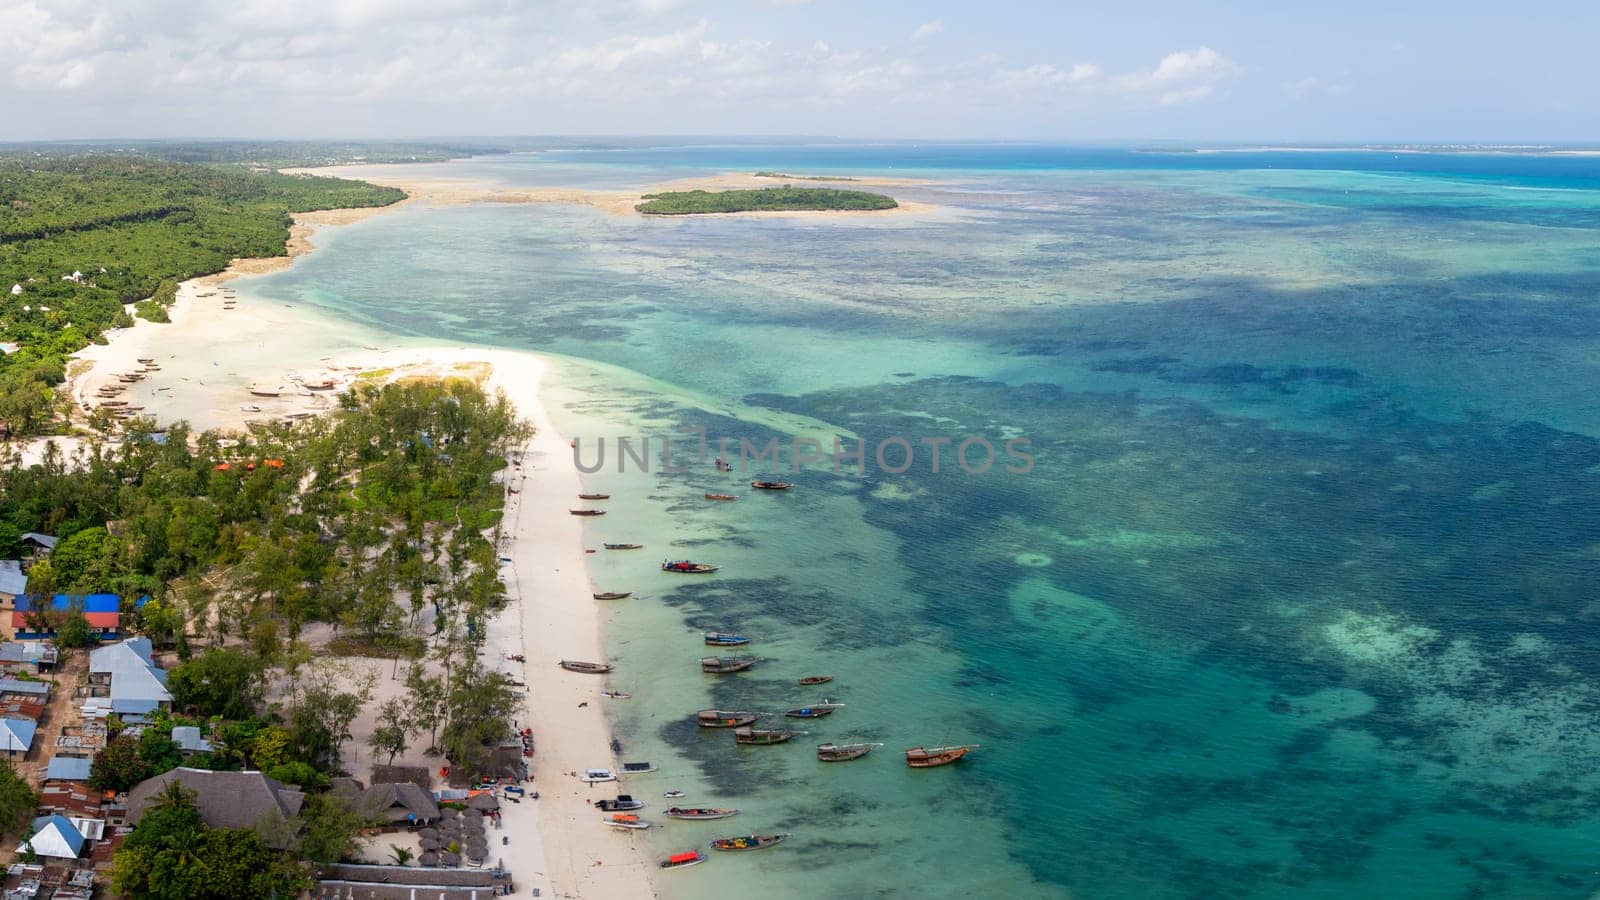 Zanzibar panorama of the fishing boats on tropical sea coast at sunny day by Robertobinetti70